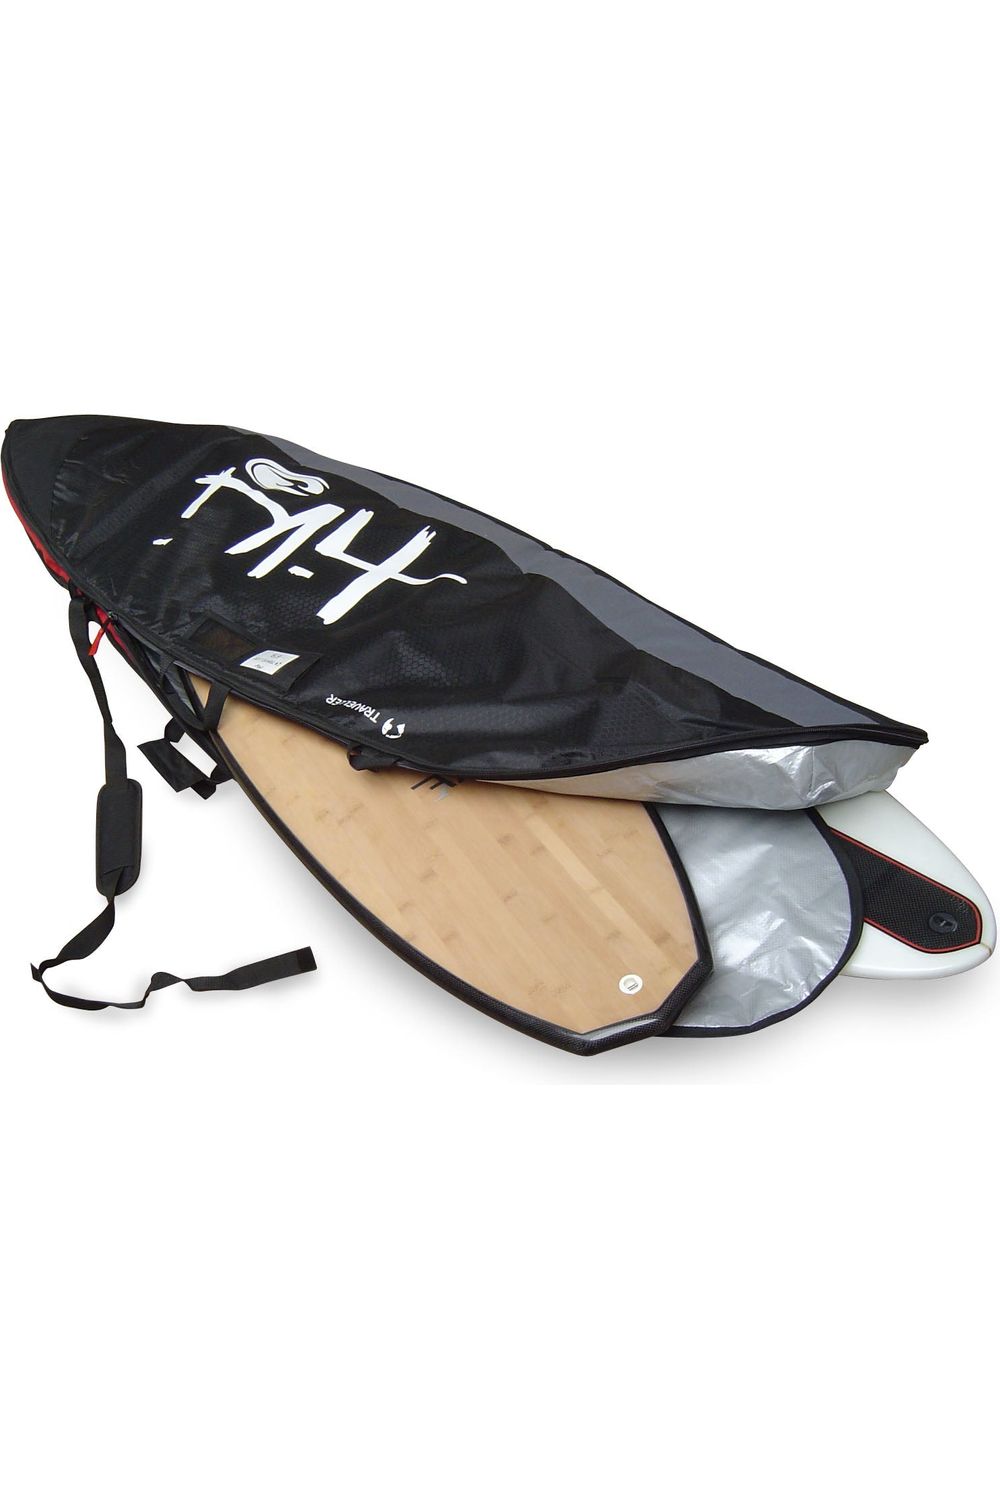 8'9 Travel Mal Surfboard Bag Mk II